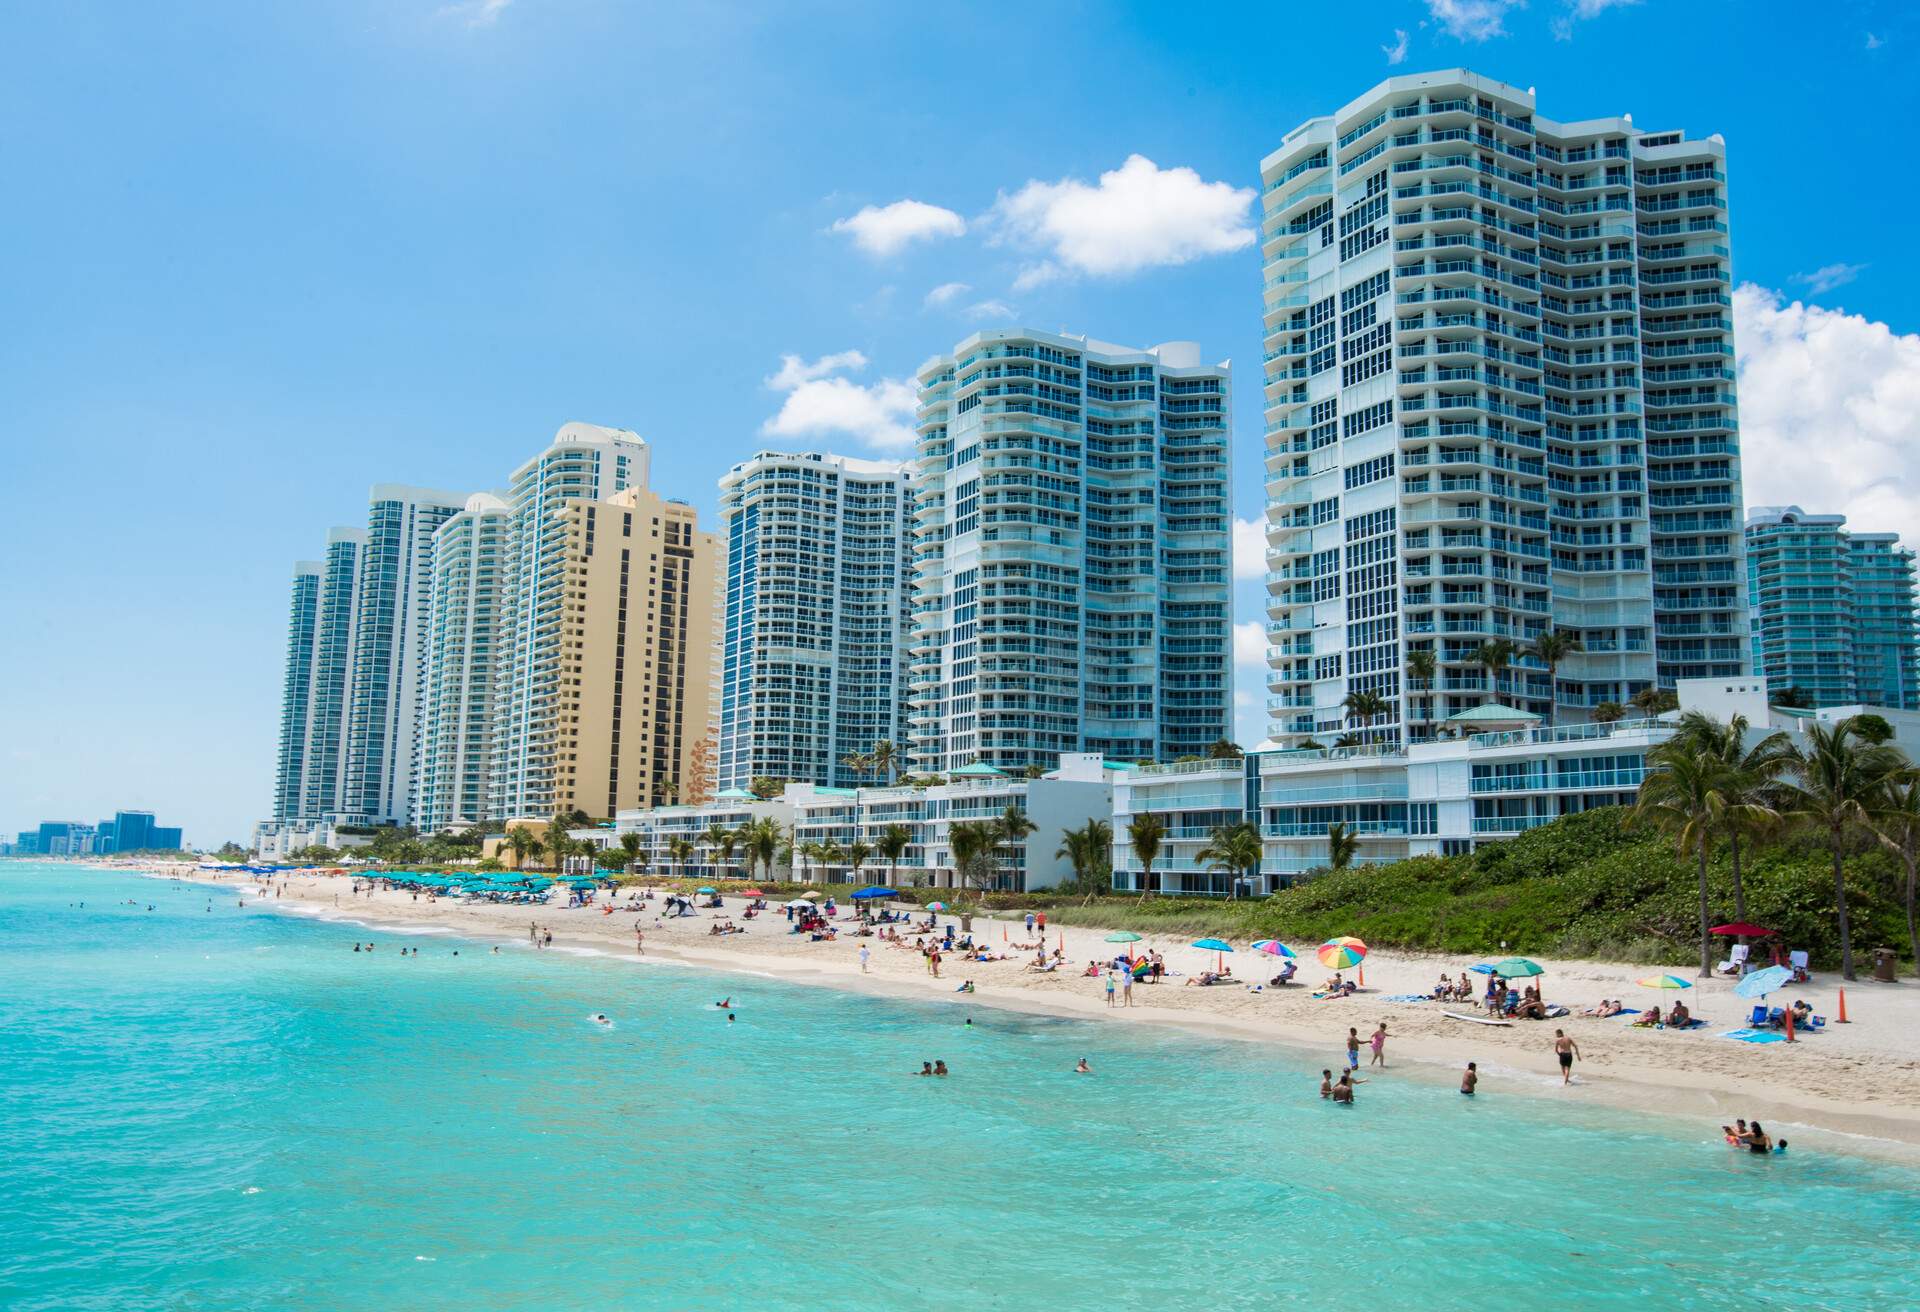 A beach in Sunny Isles. Miami, Florida